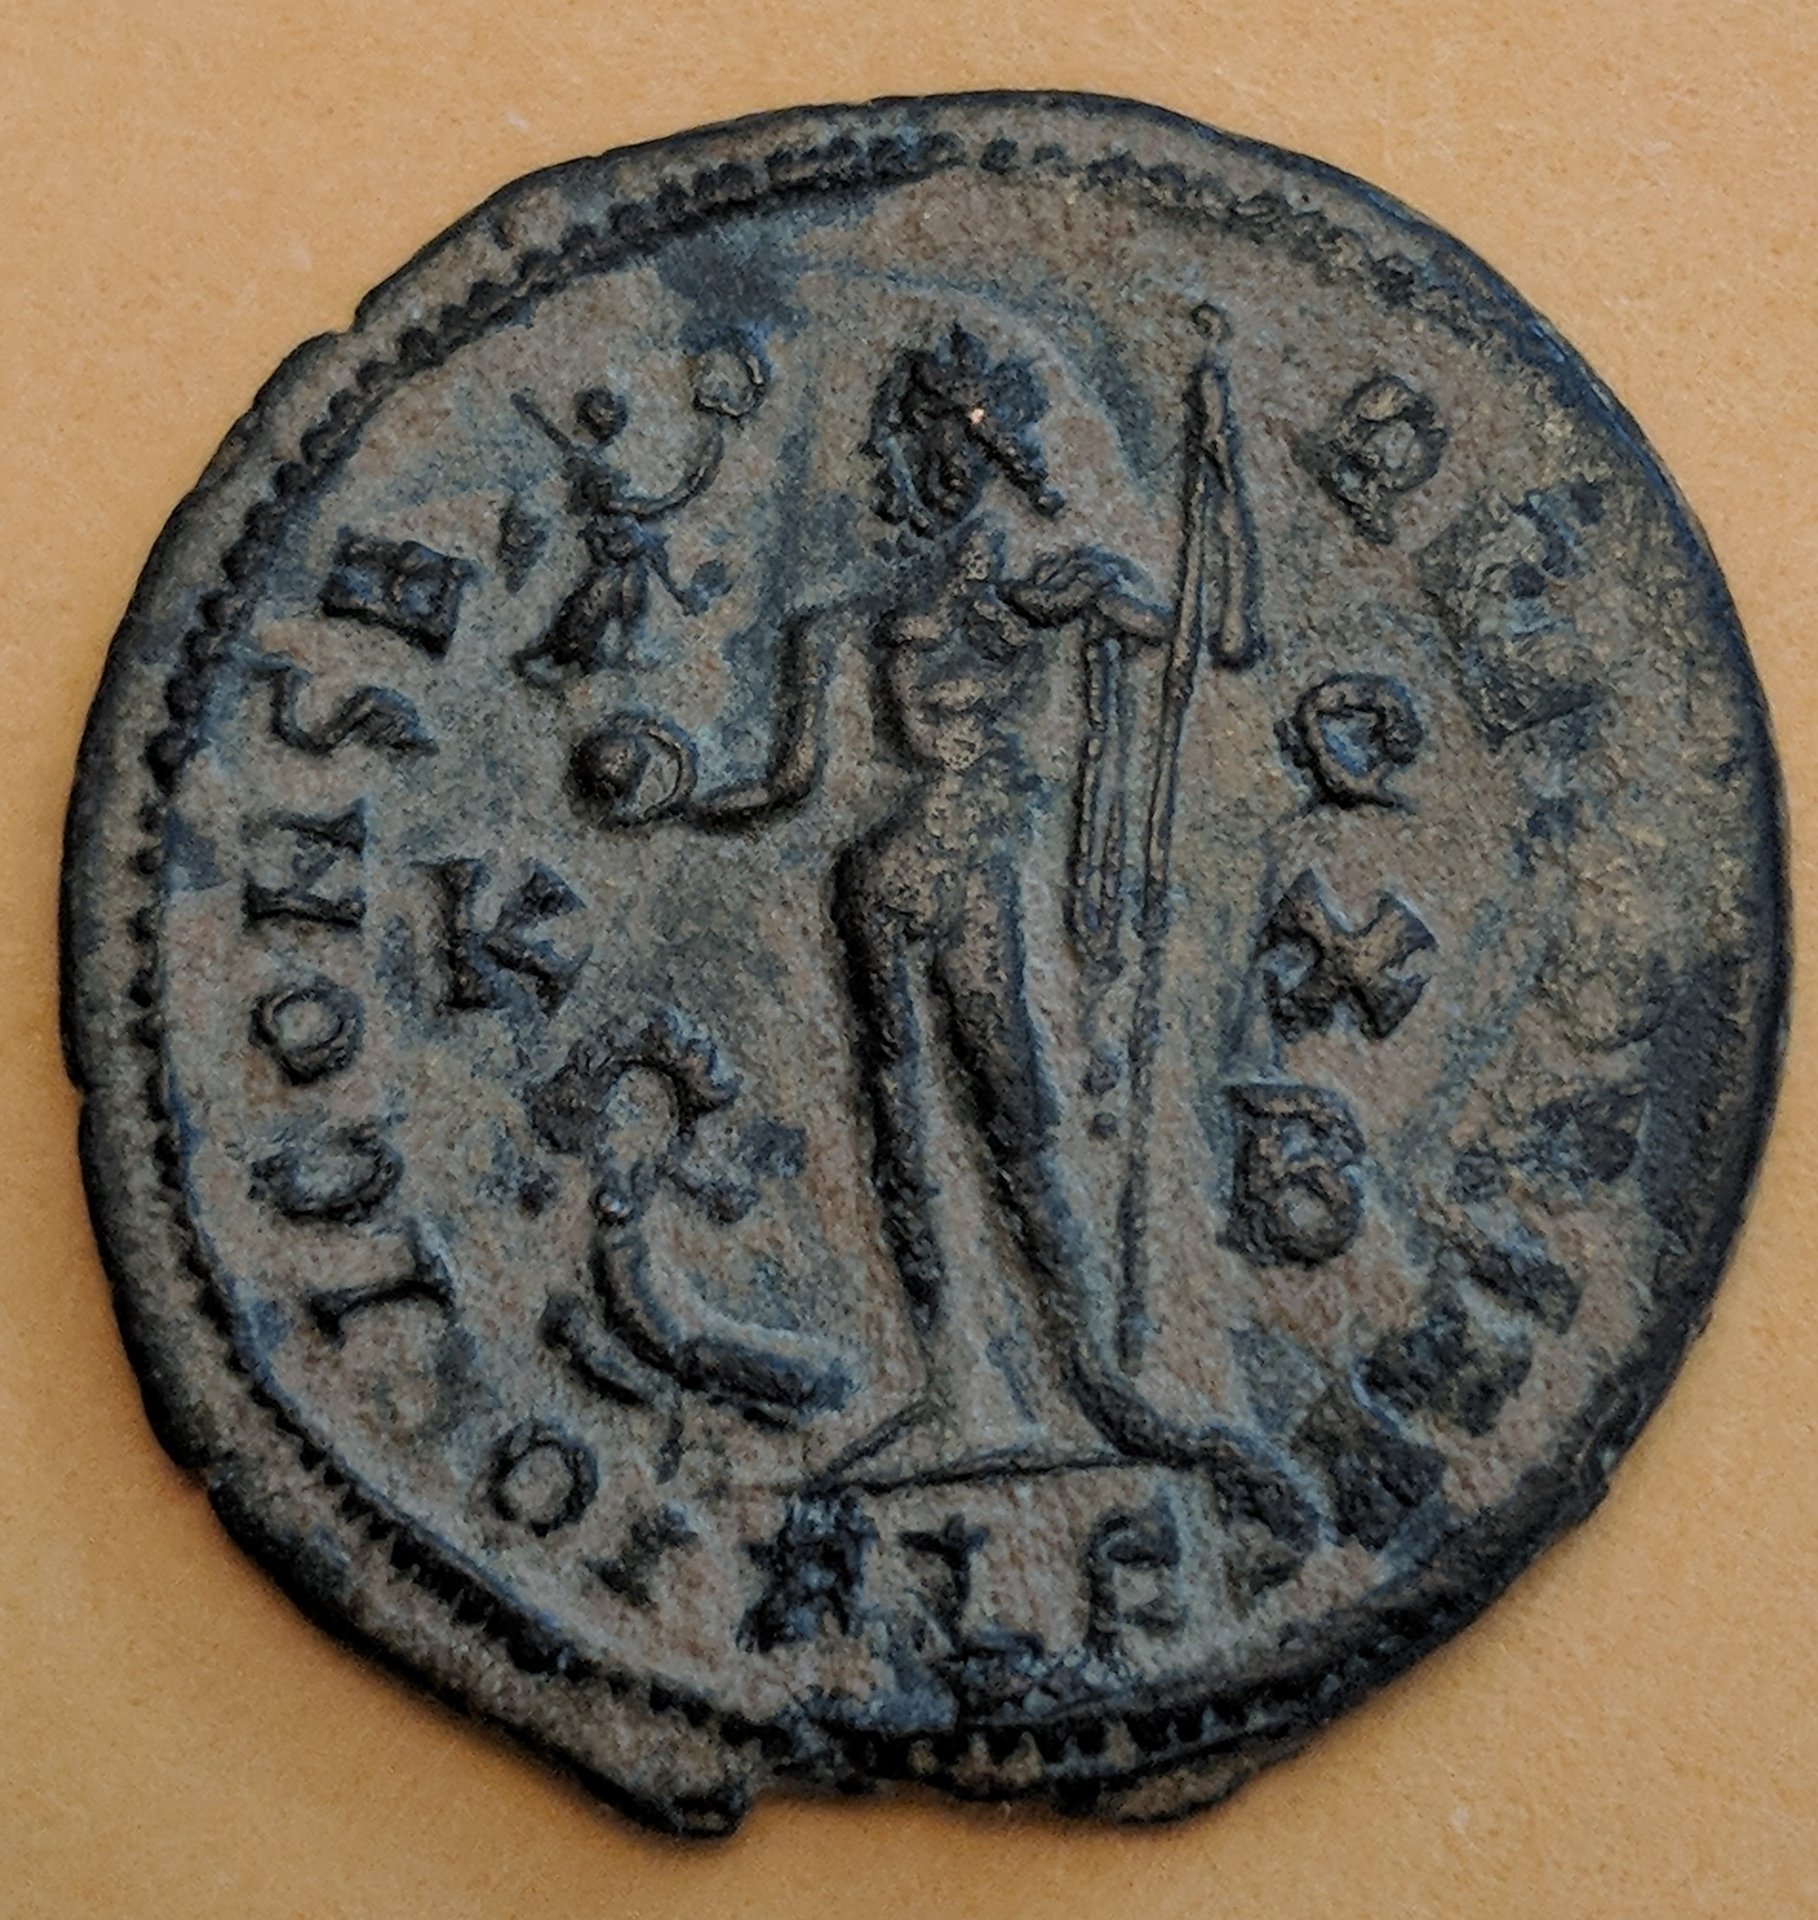 New ancient Roman Licinius | Coin Talk